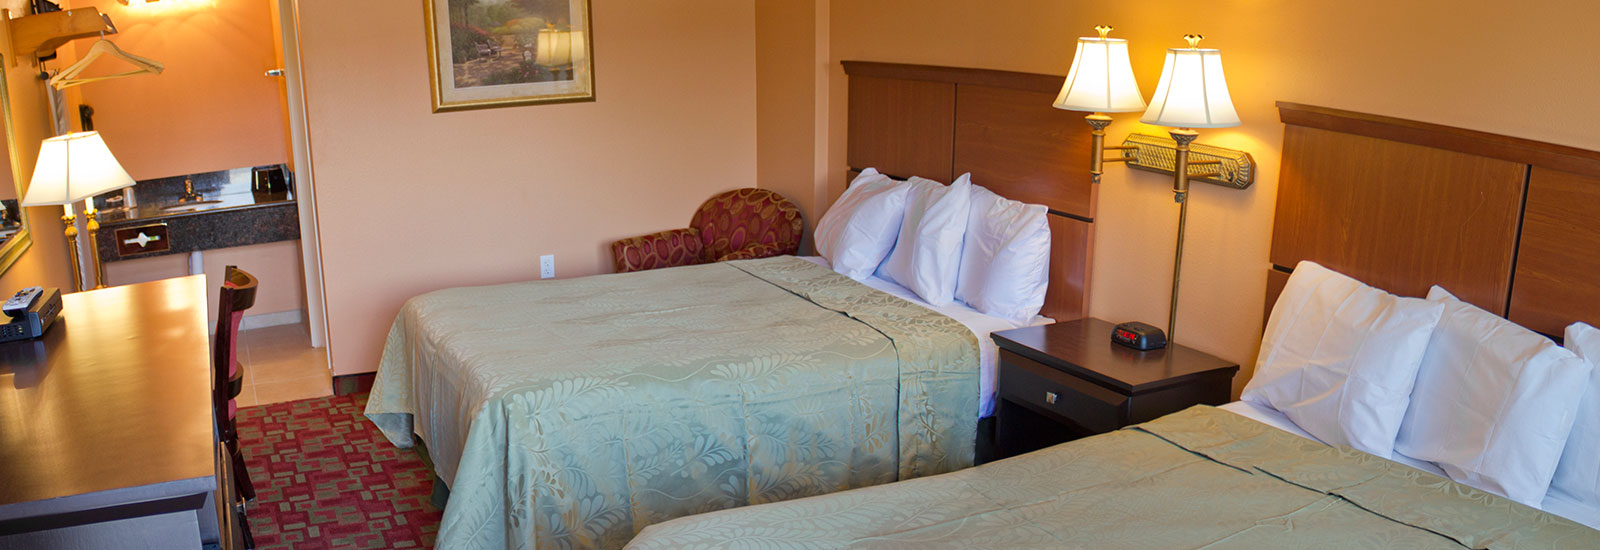 Rancho California Inn - Double Beds Room